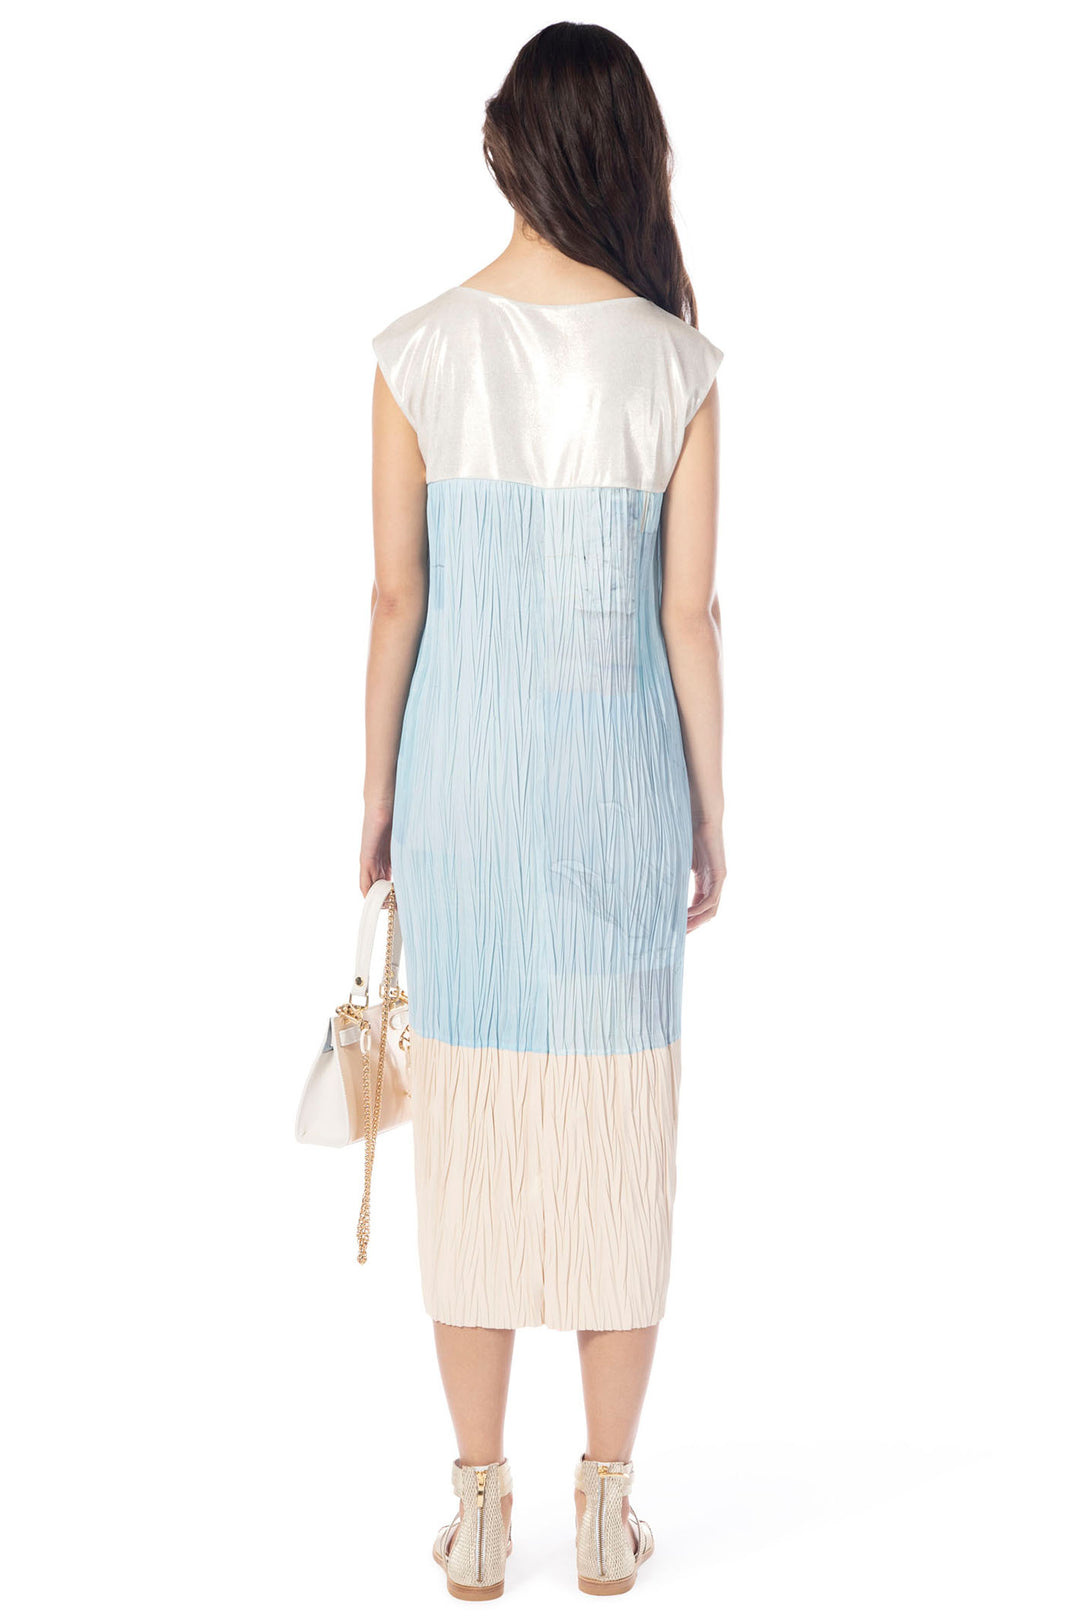 Elisa Cavaletti ELP242033401 Powder Blue Pleated Dress - Experience Boutique